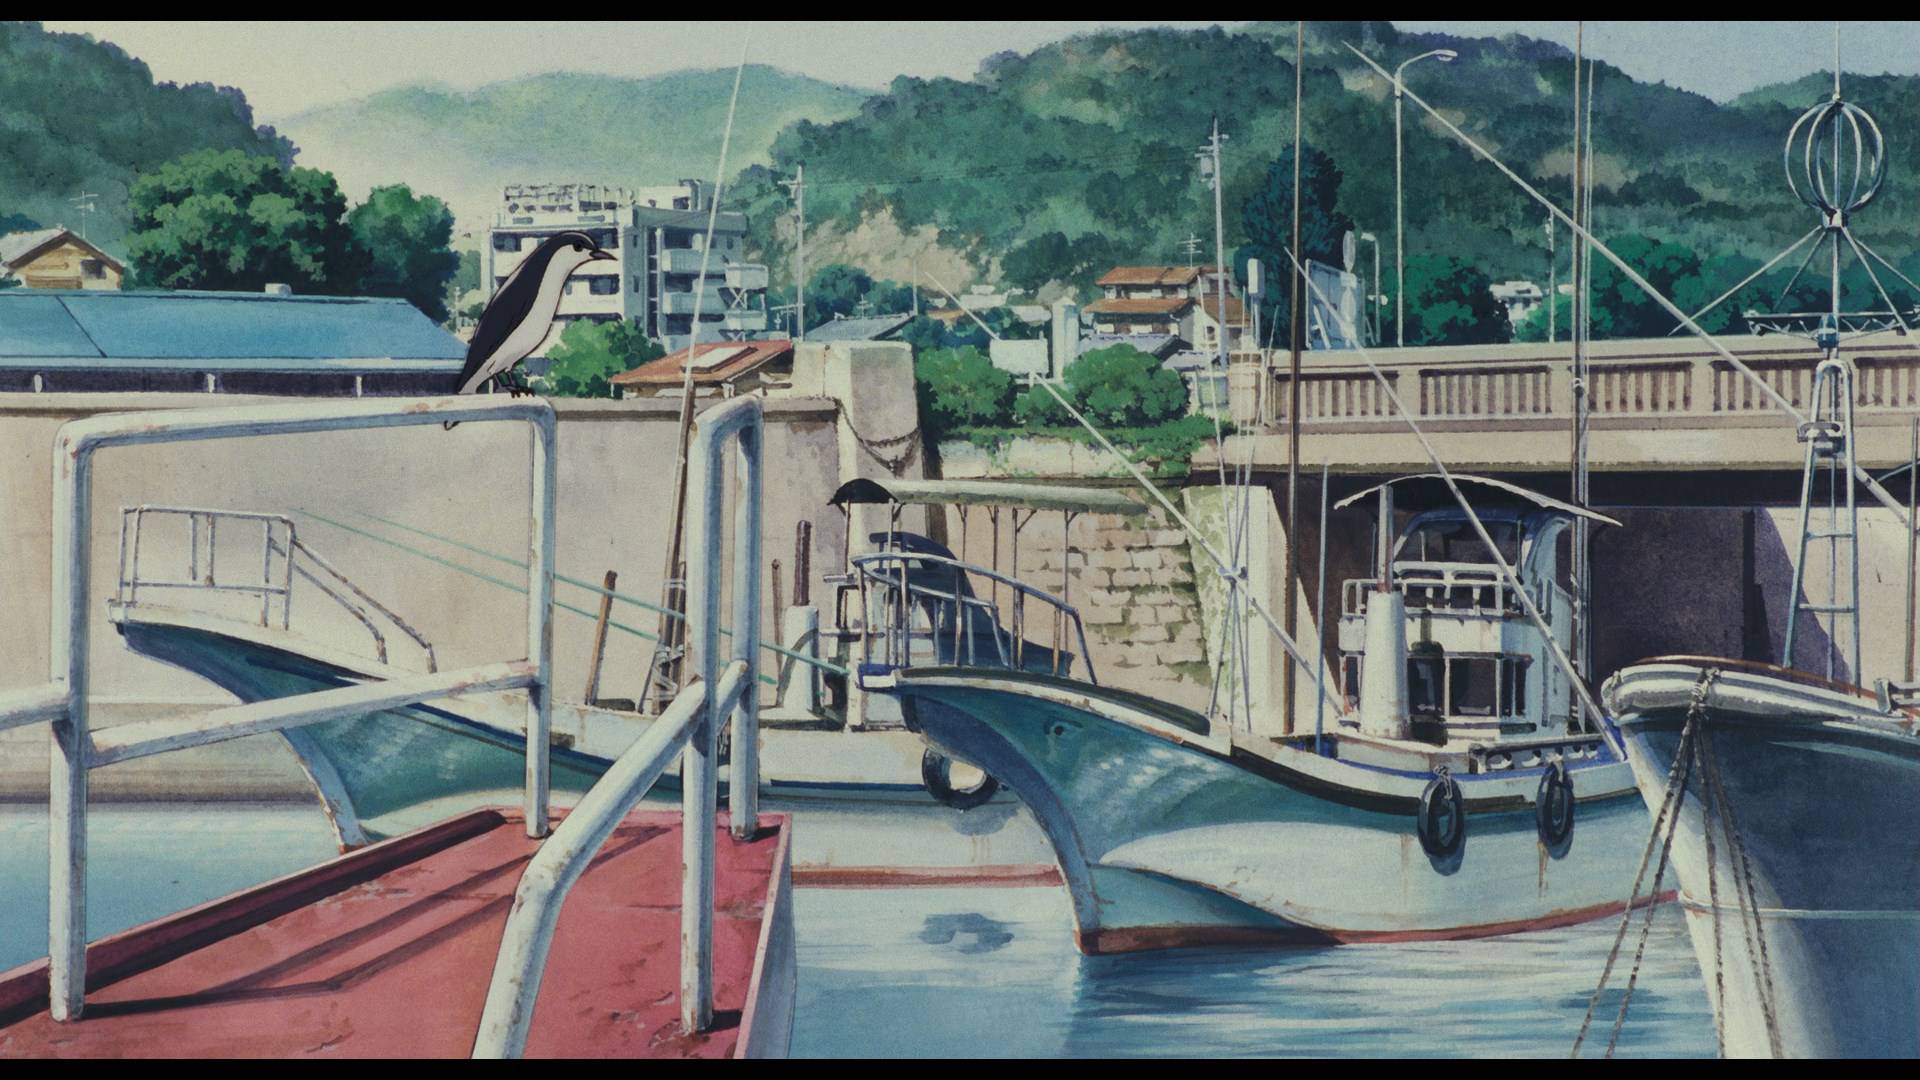 Studio Ghibli's Overlooked Training Project: 25 Years Since Ocean